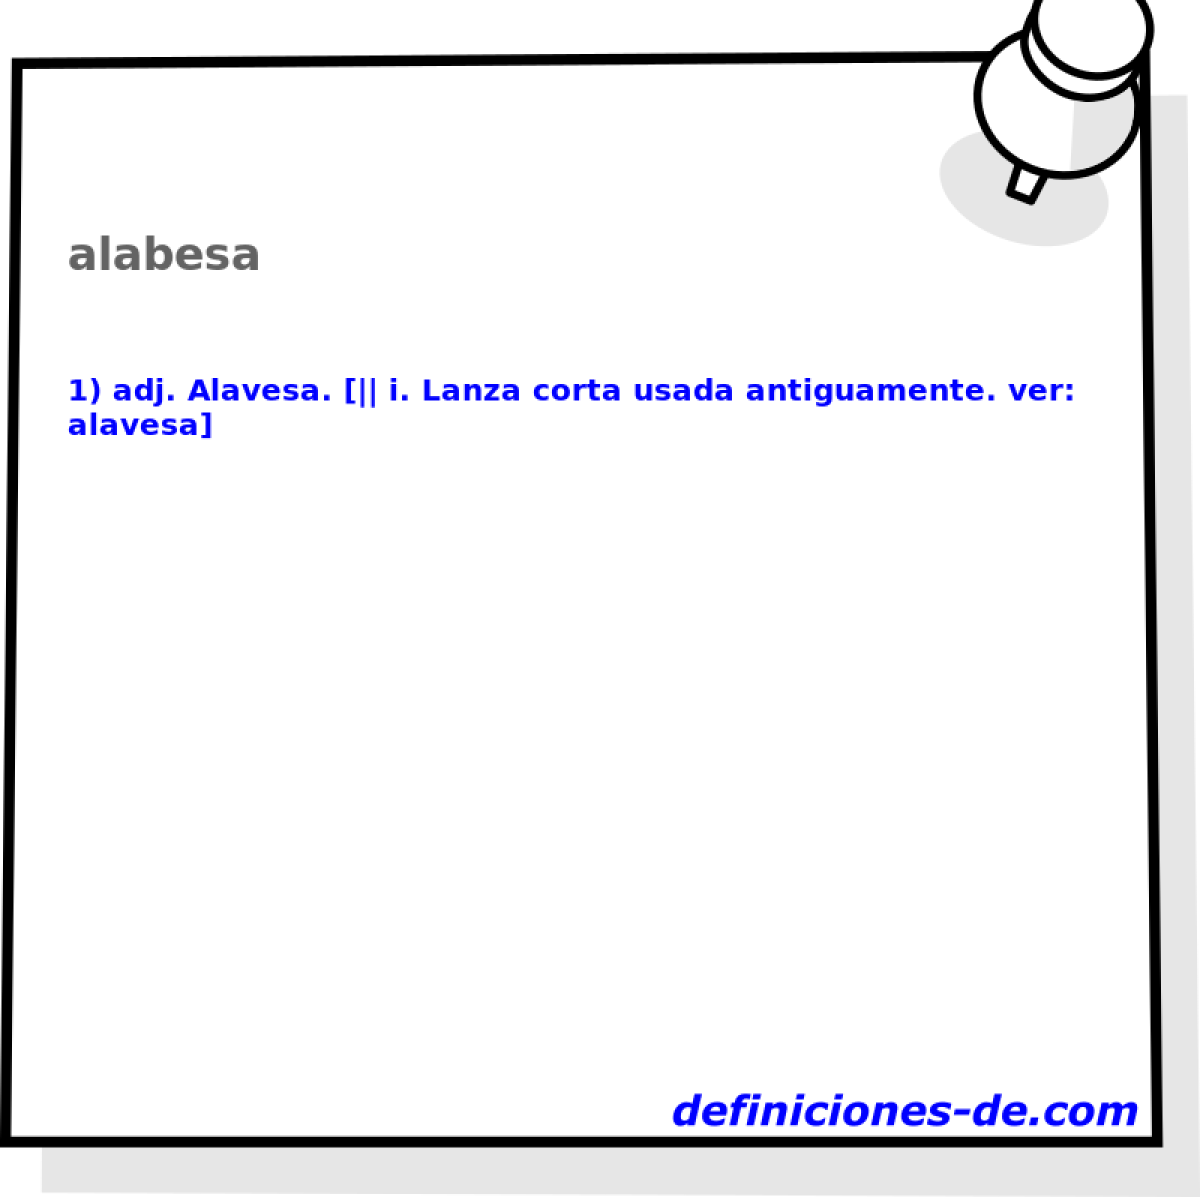 alabesa 